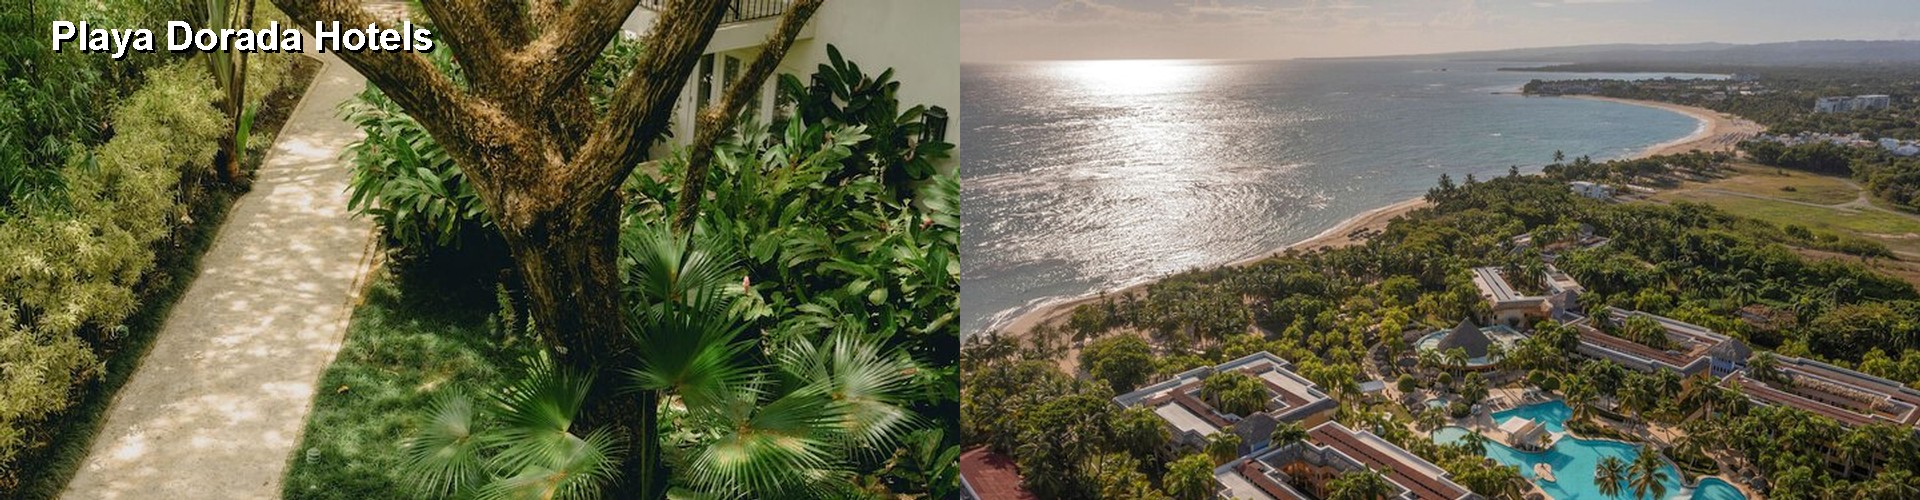 5 Best Hotels near Playa Dorada